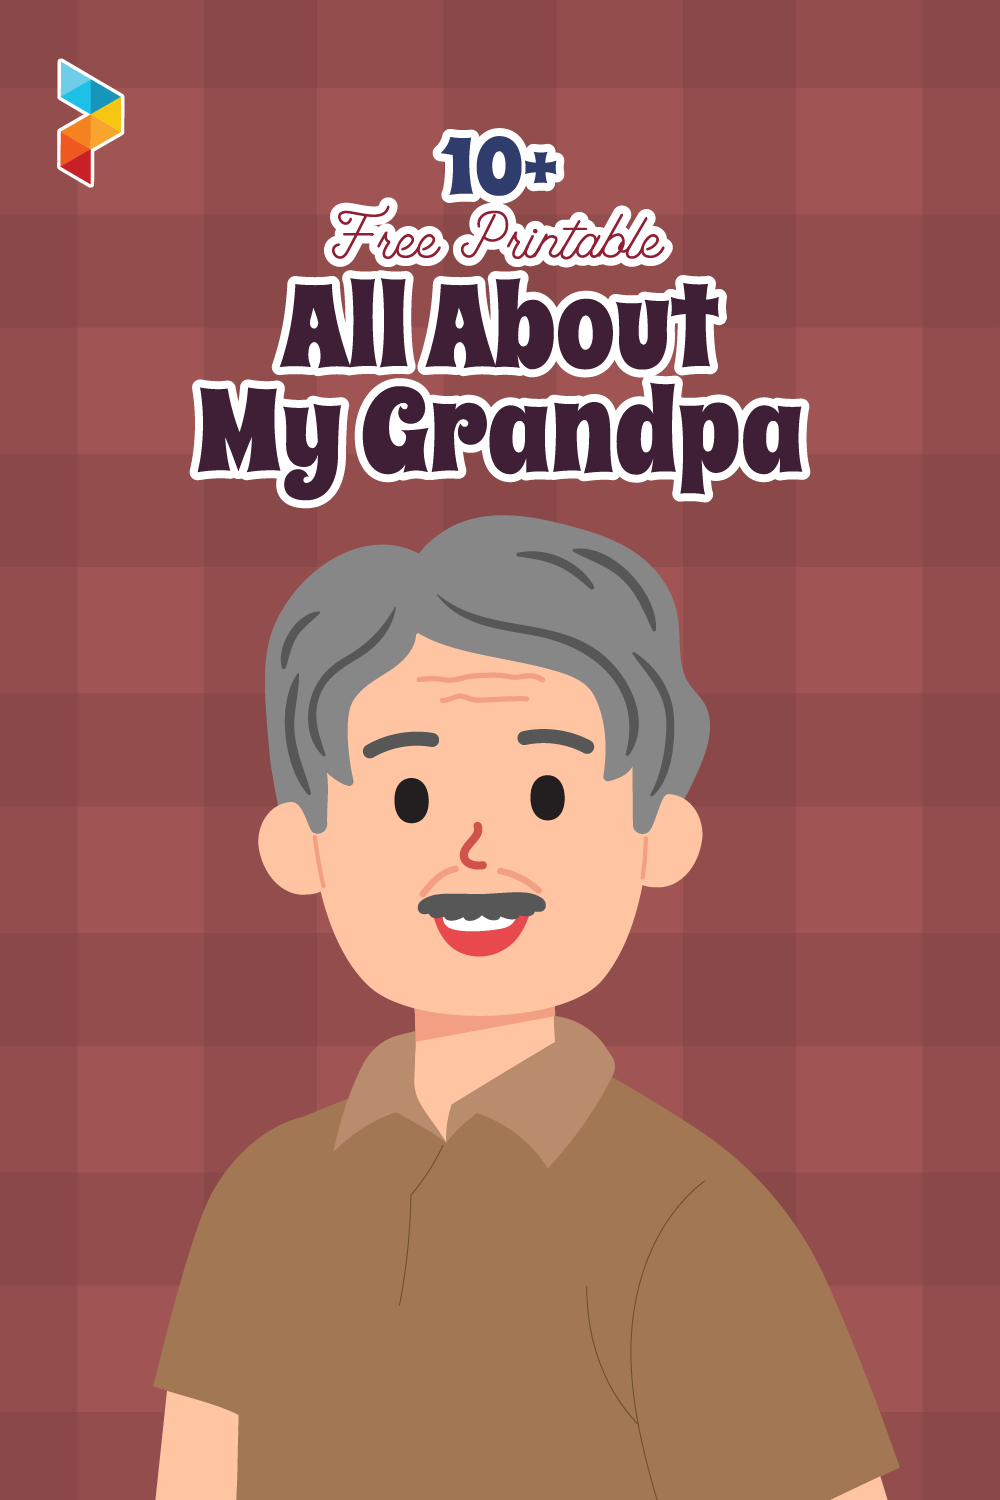 All About My Grandpa